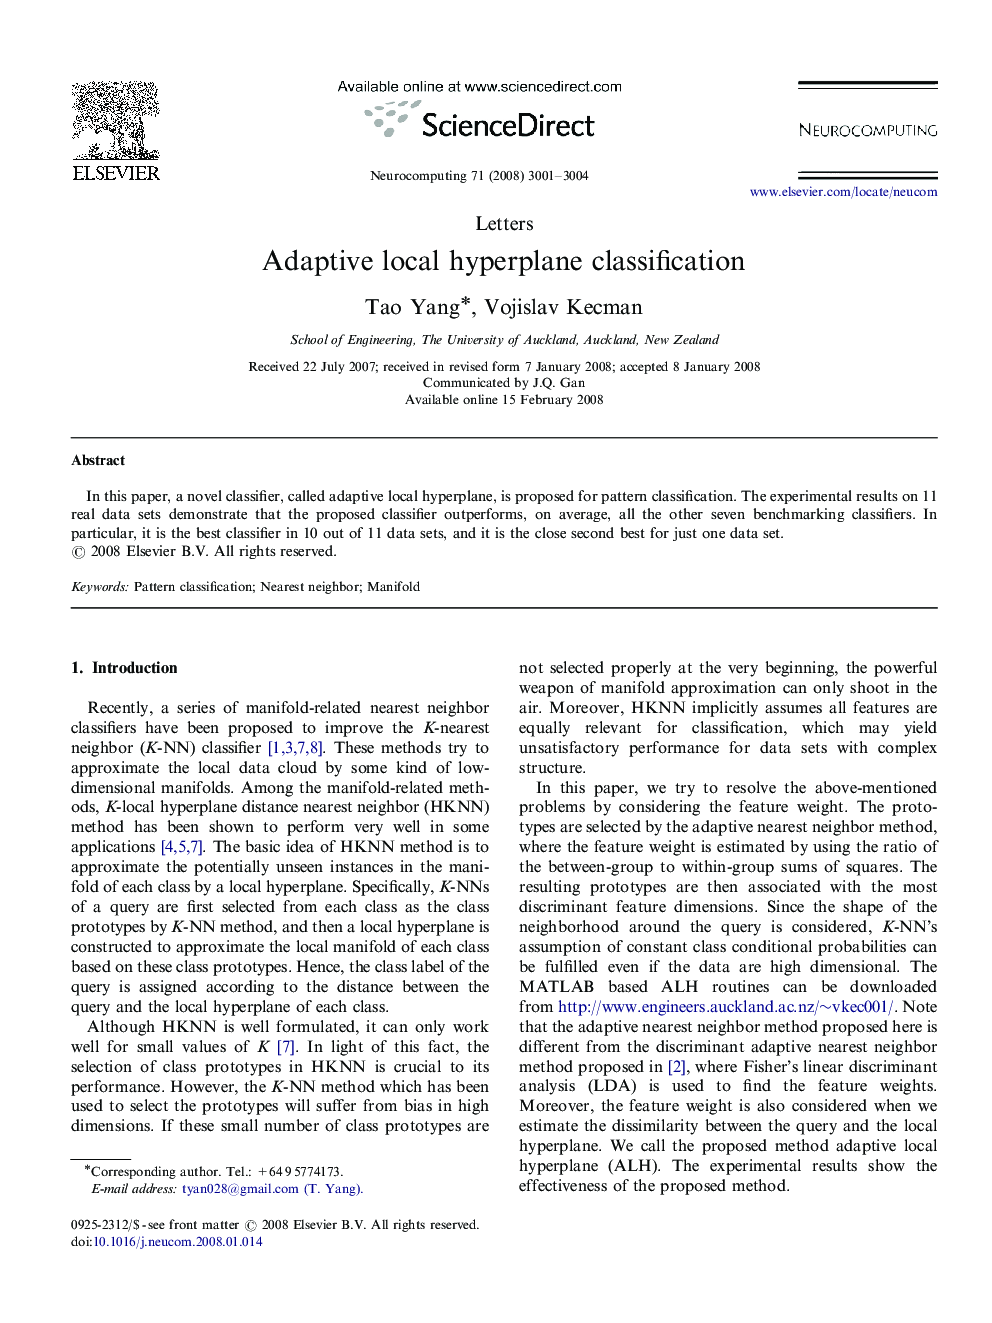 Adaptive local hyperplane classification